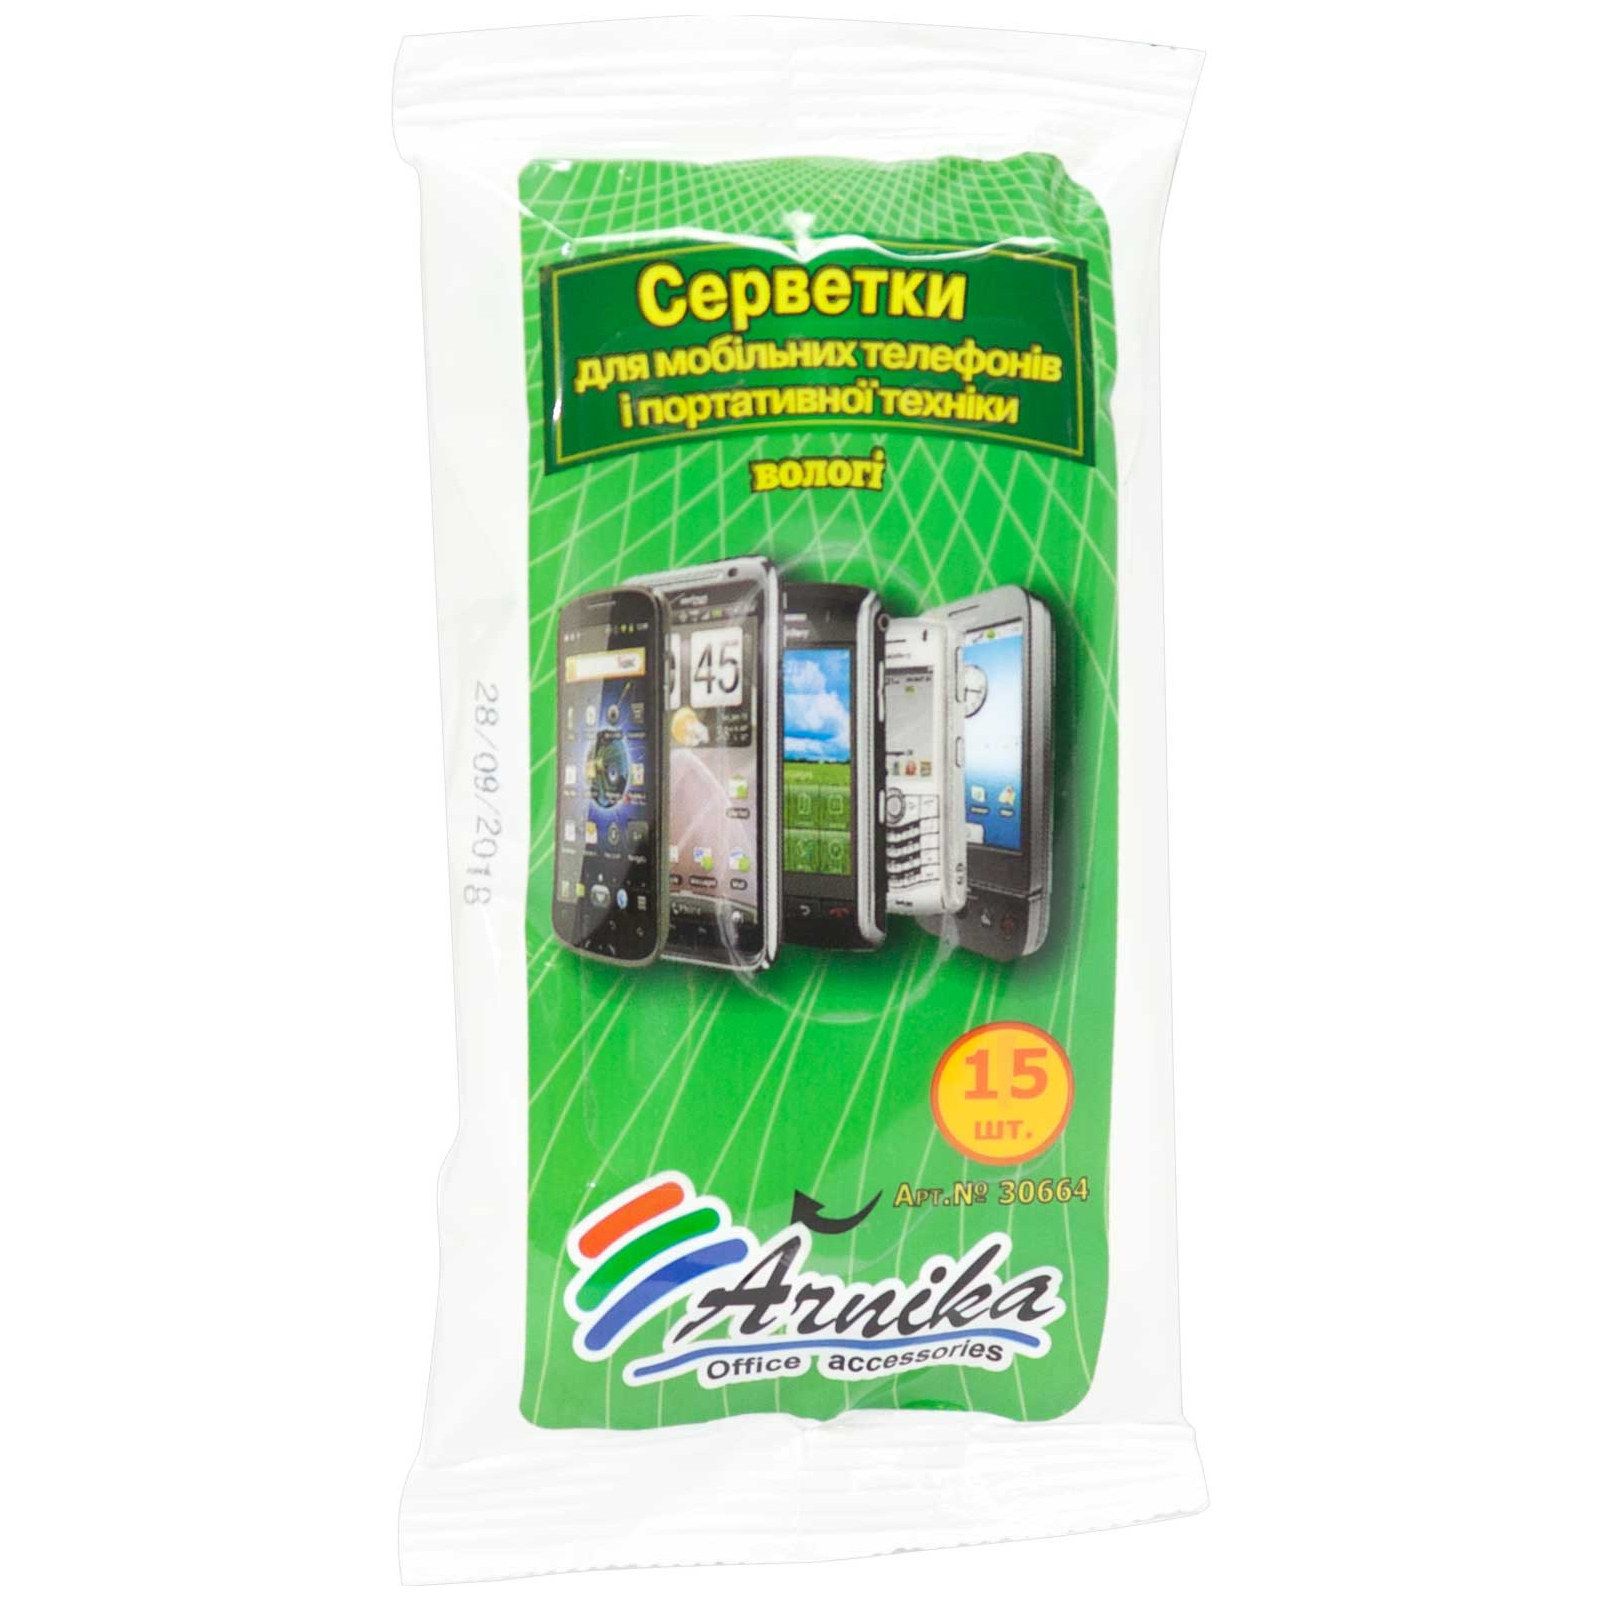 Салфетки Arnika for mobile devices, 15шт (30664)